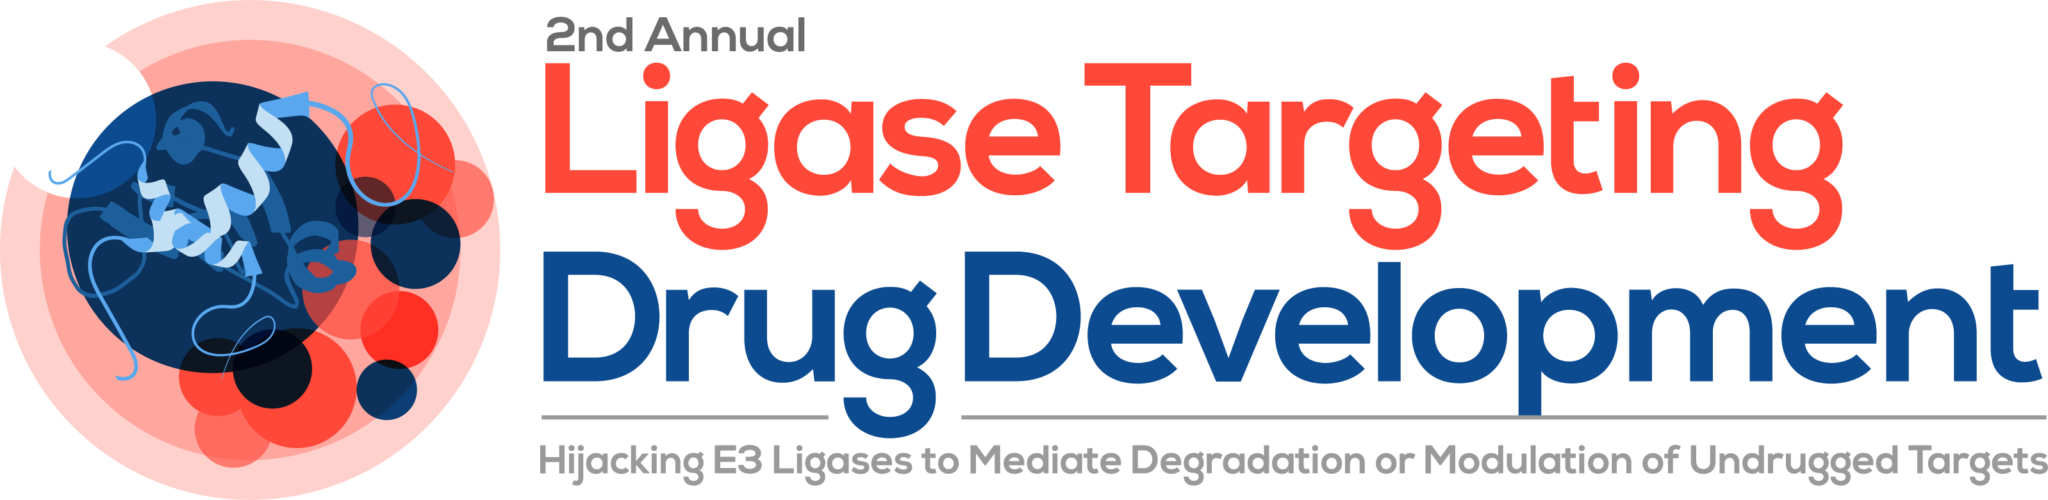 Ligase-Targeting-Drug-Development-Summit logo